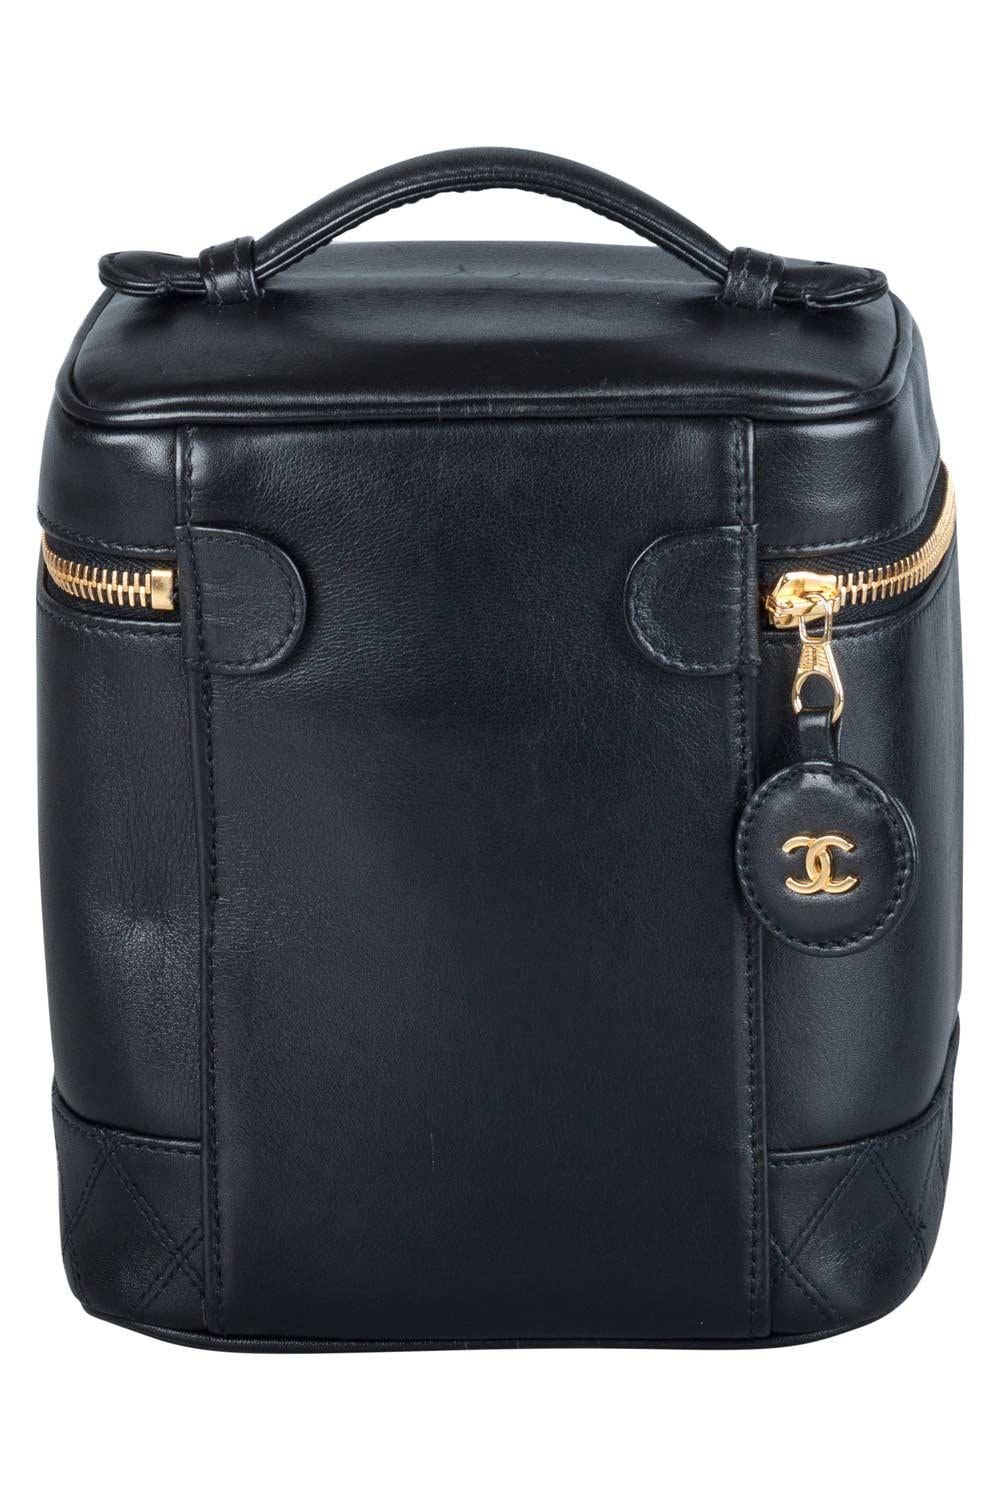 Chanel Black Leather Cosmetic Vanity Bag In Good Condition In Dubai, Al Qouz 2